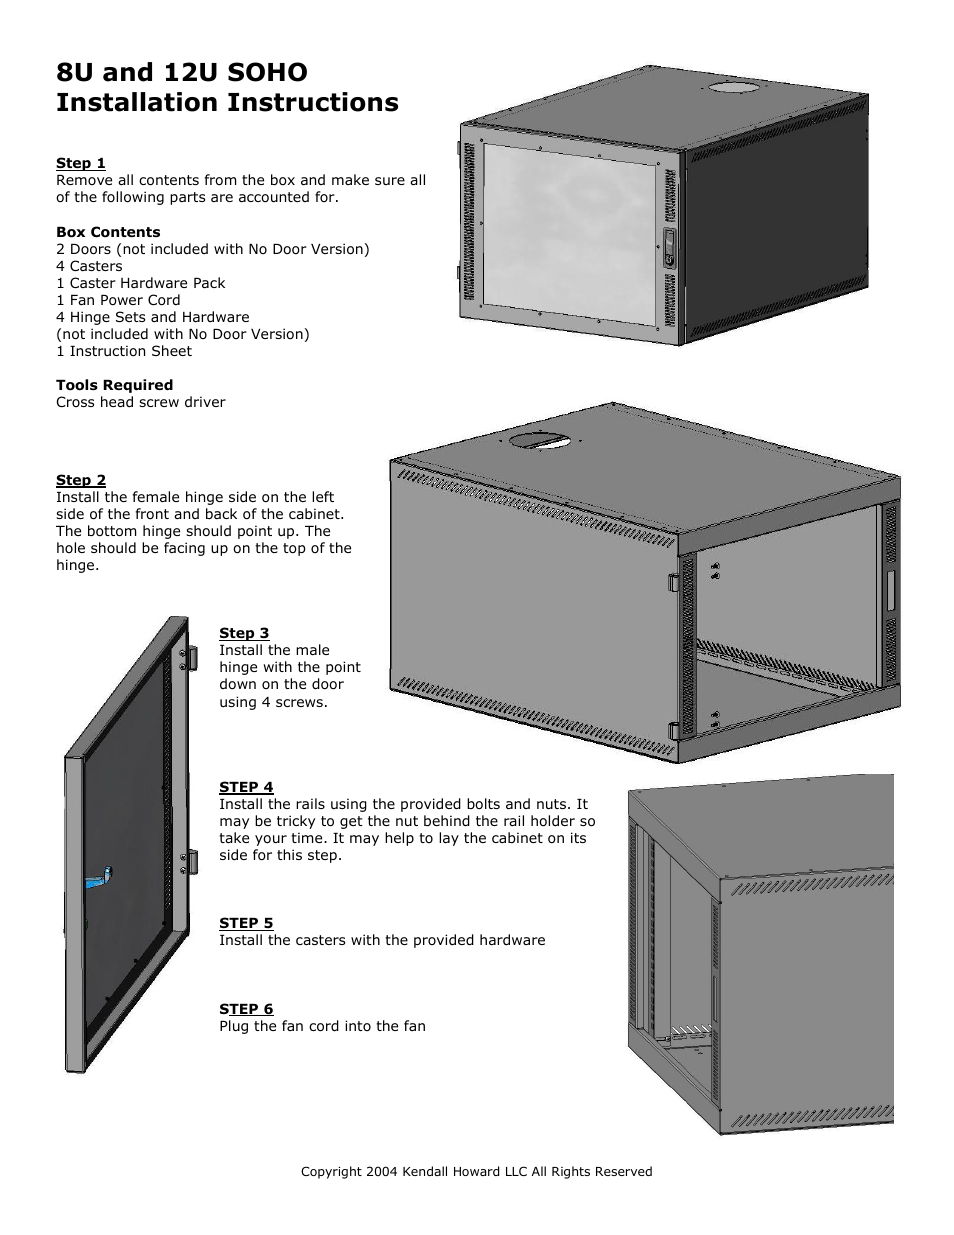 1932-3-001-12 12U Compact SOHO Server Cabinet